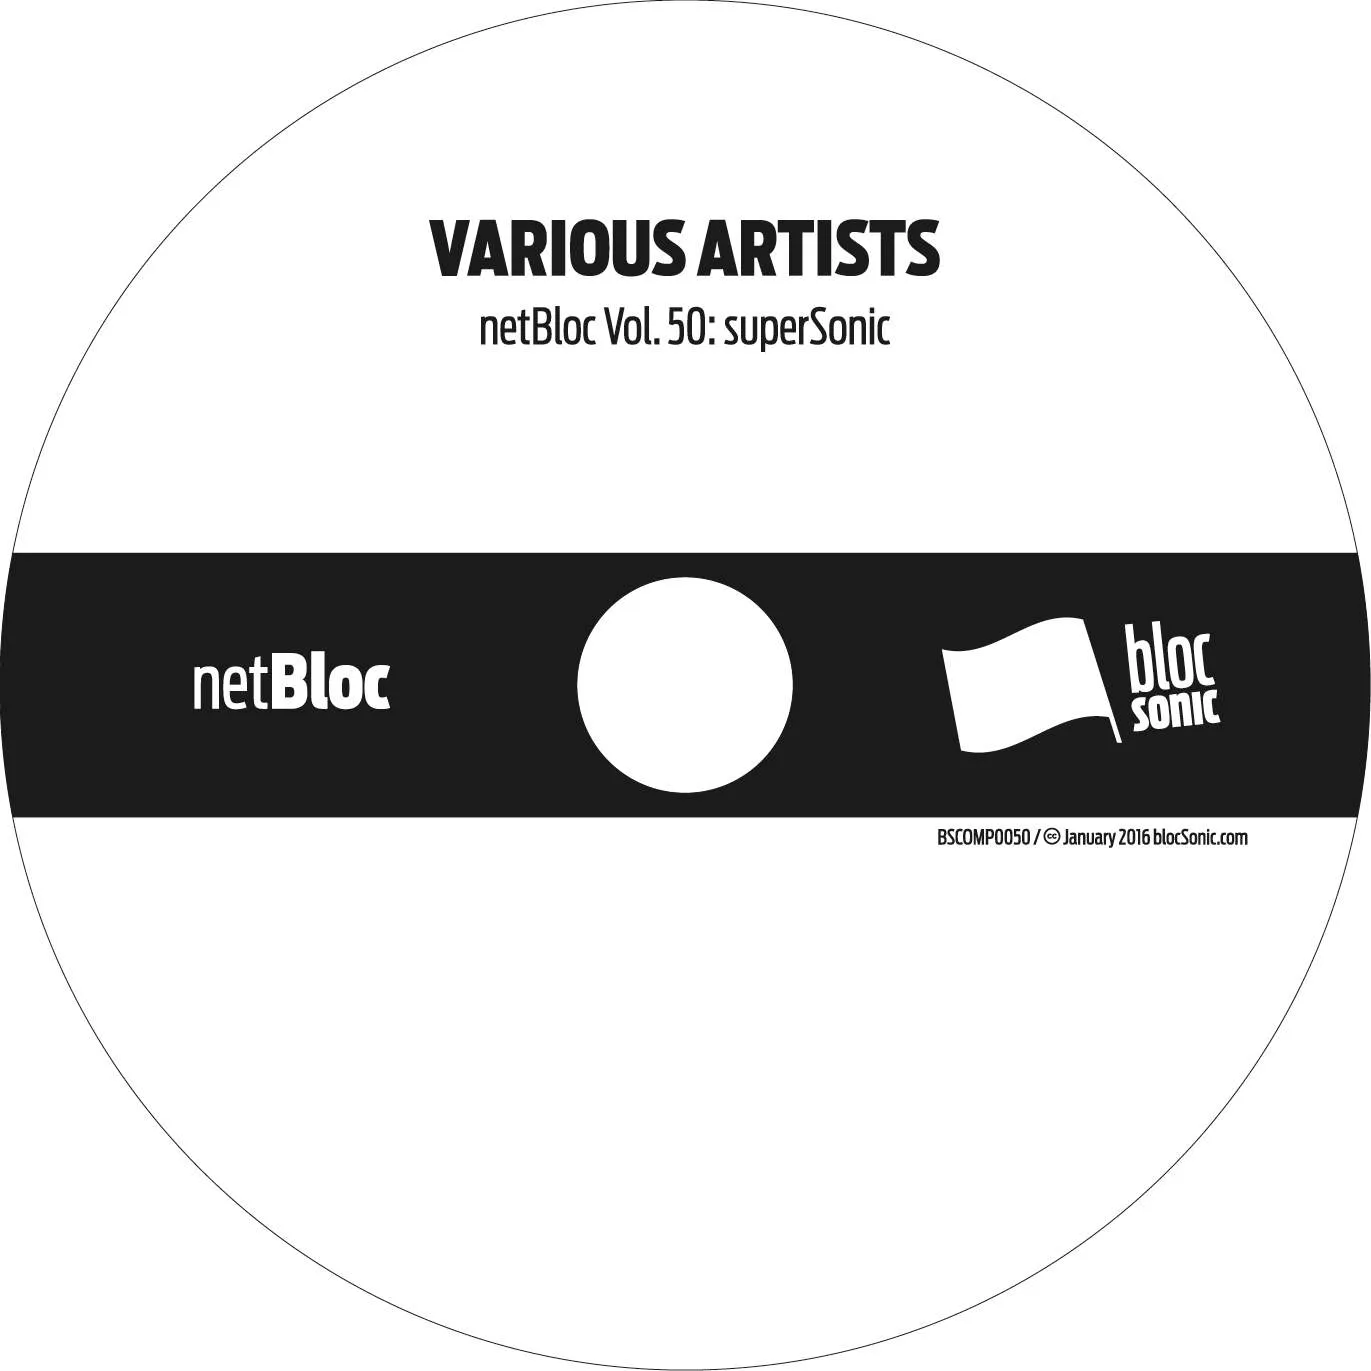 Album disc for “netBloc Vol. 50: superSonic” by Various Artists